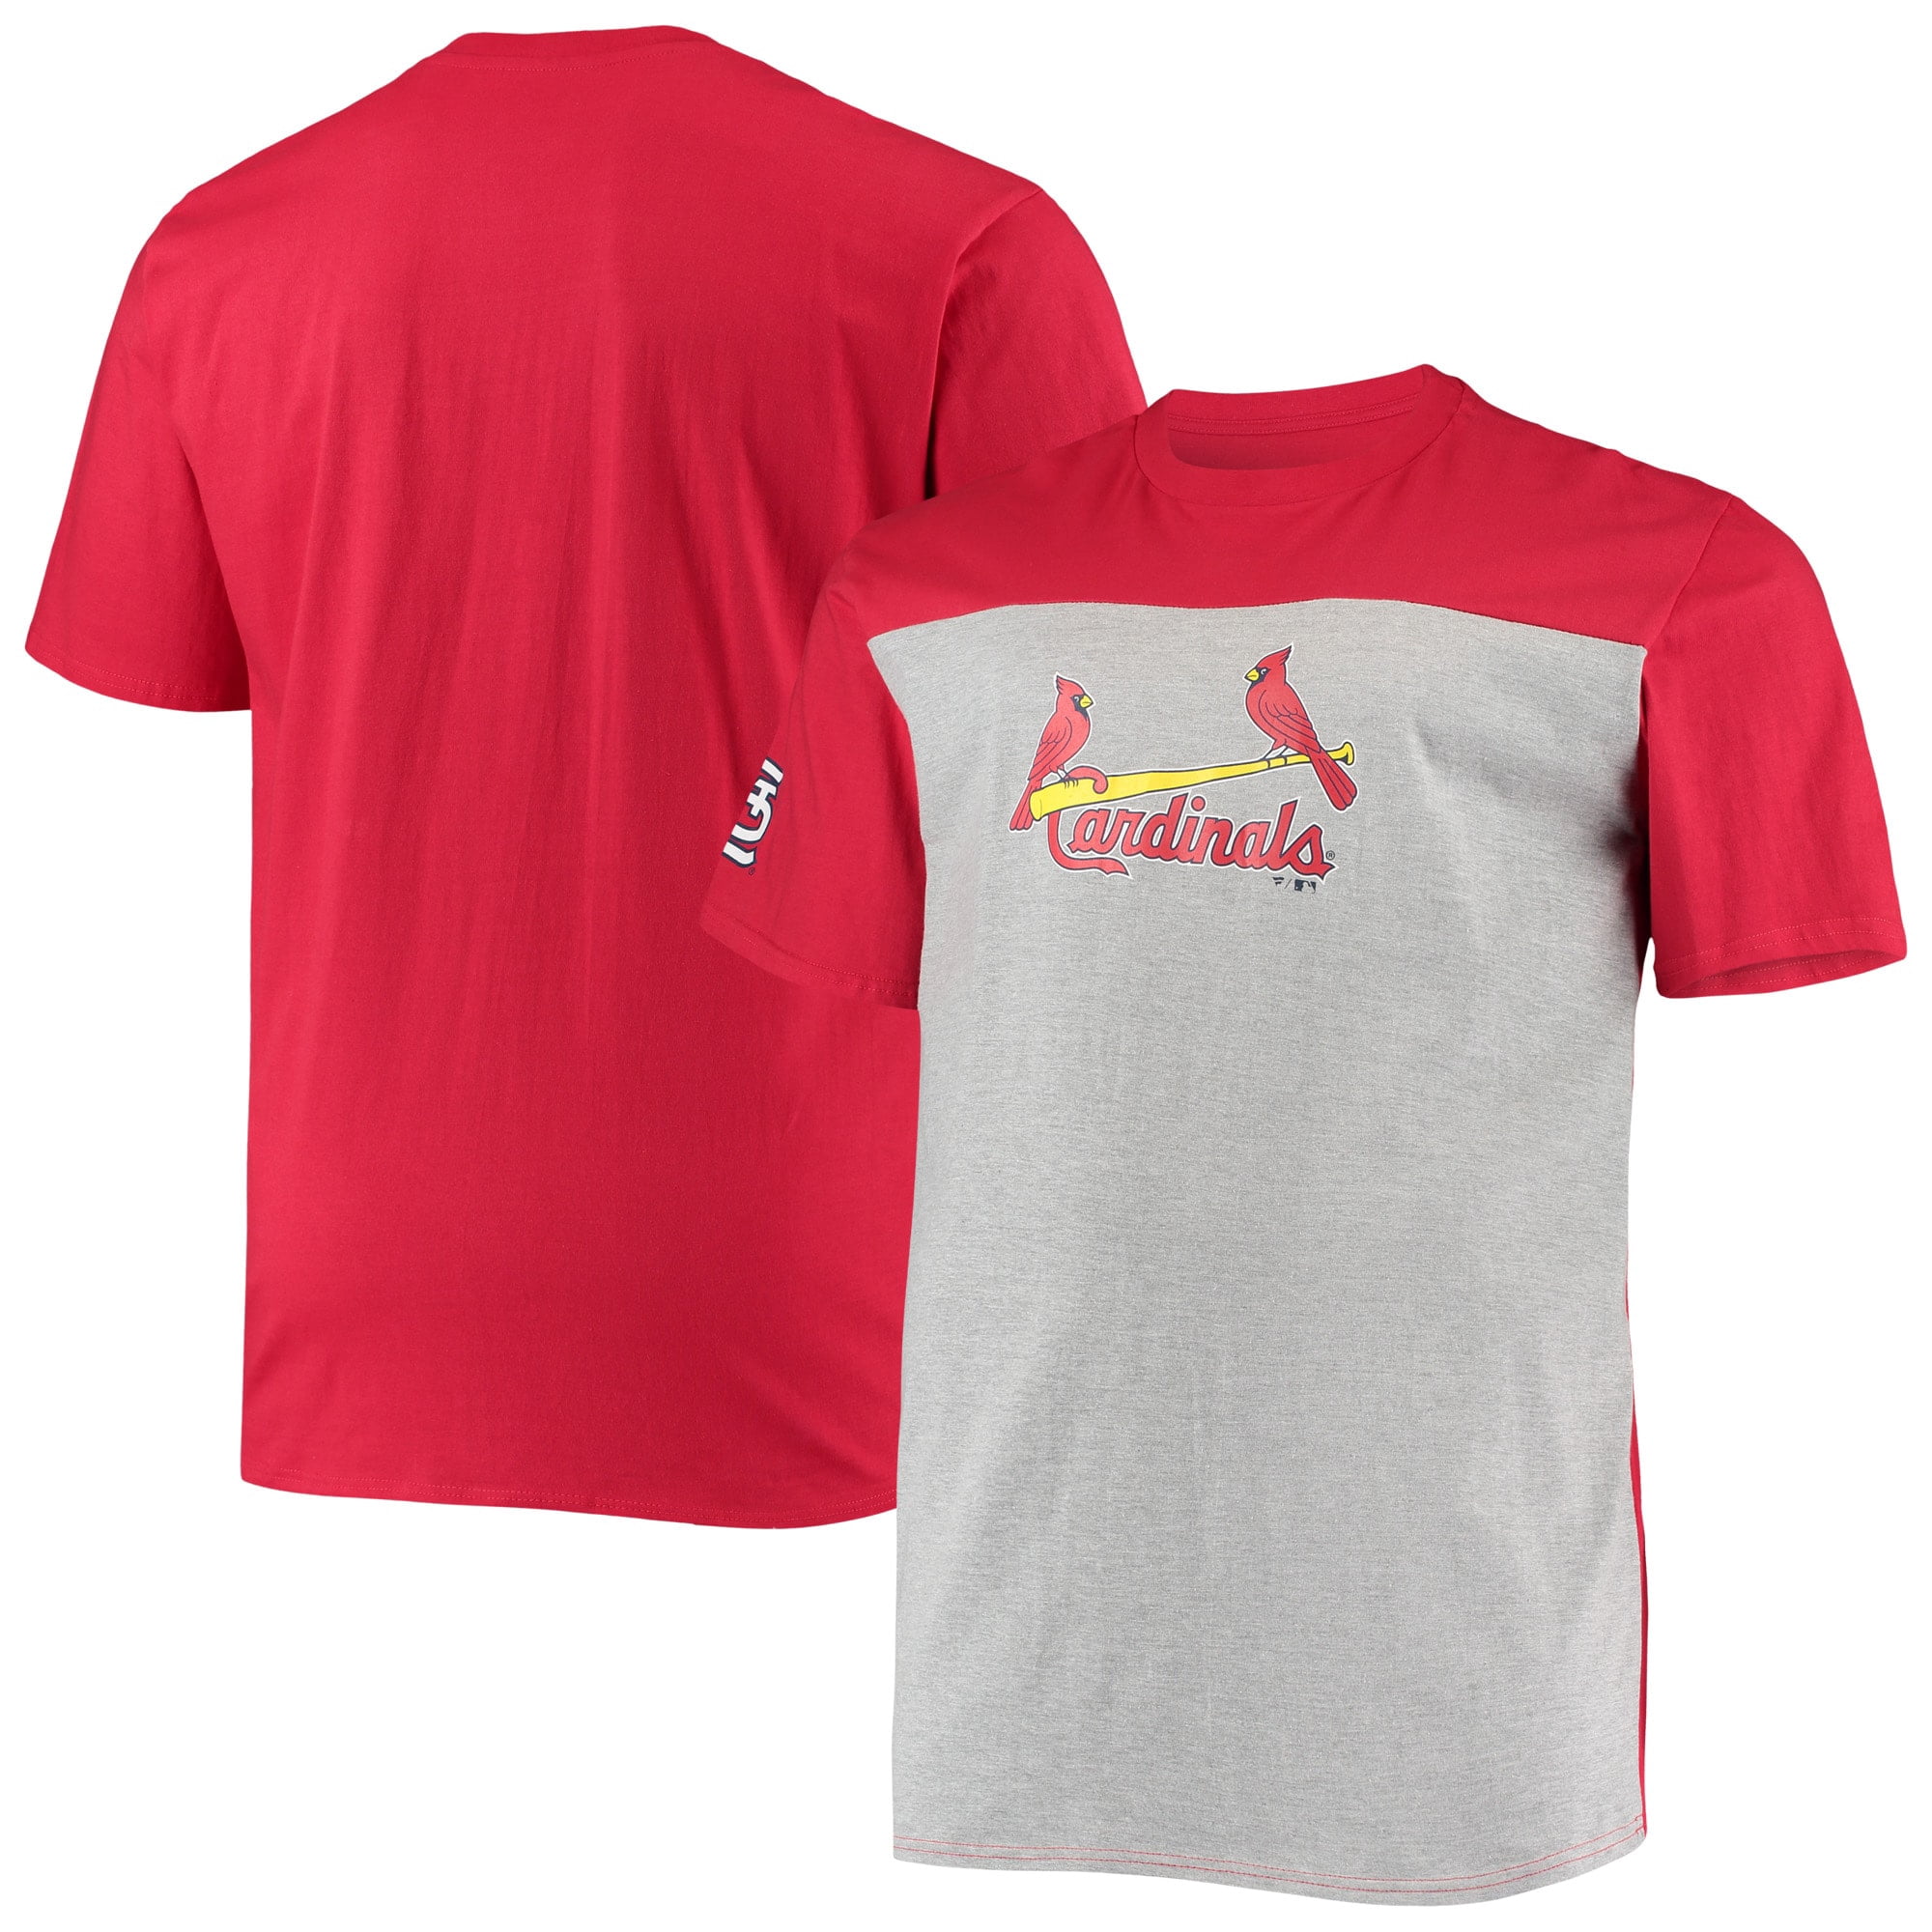 FANATICS Men's Fanatics Branded Gray/Red St. Louis Cardinals